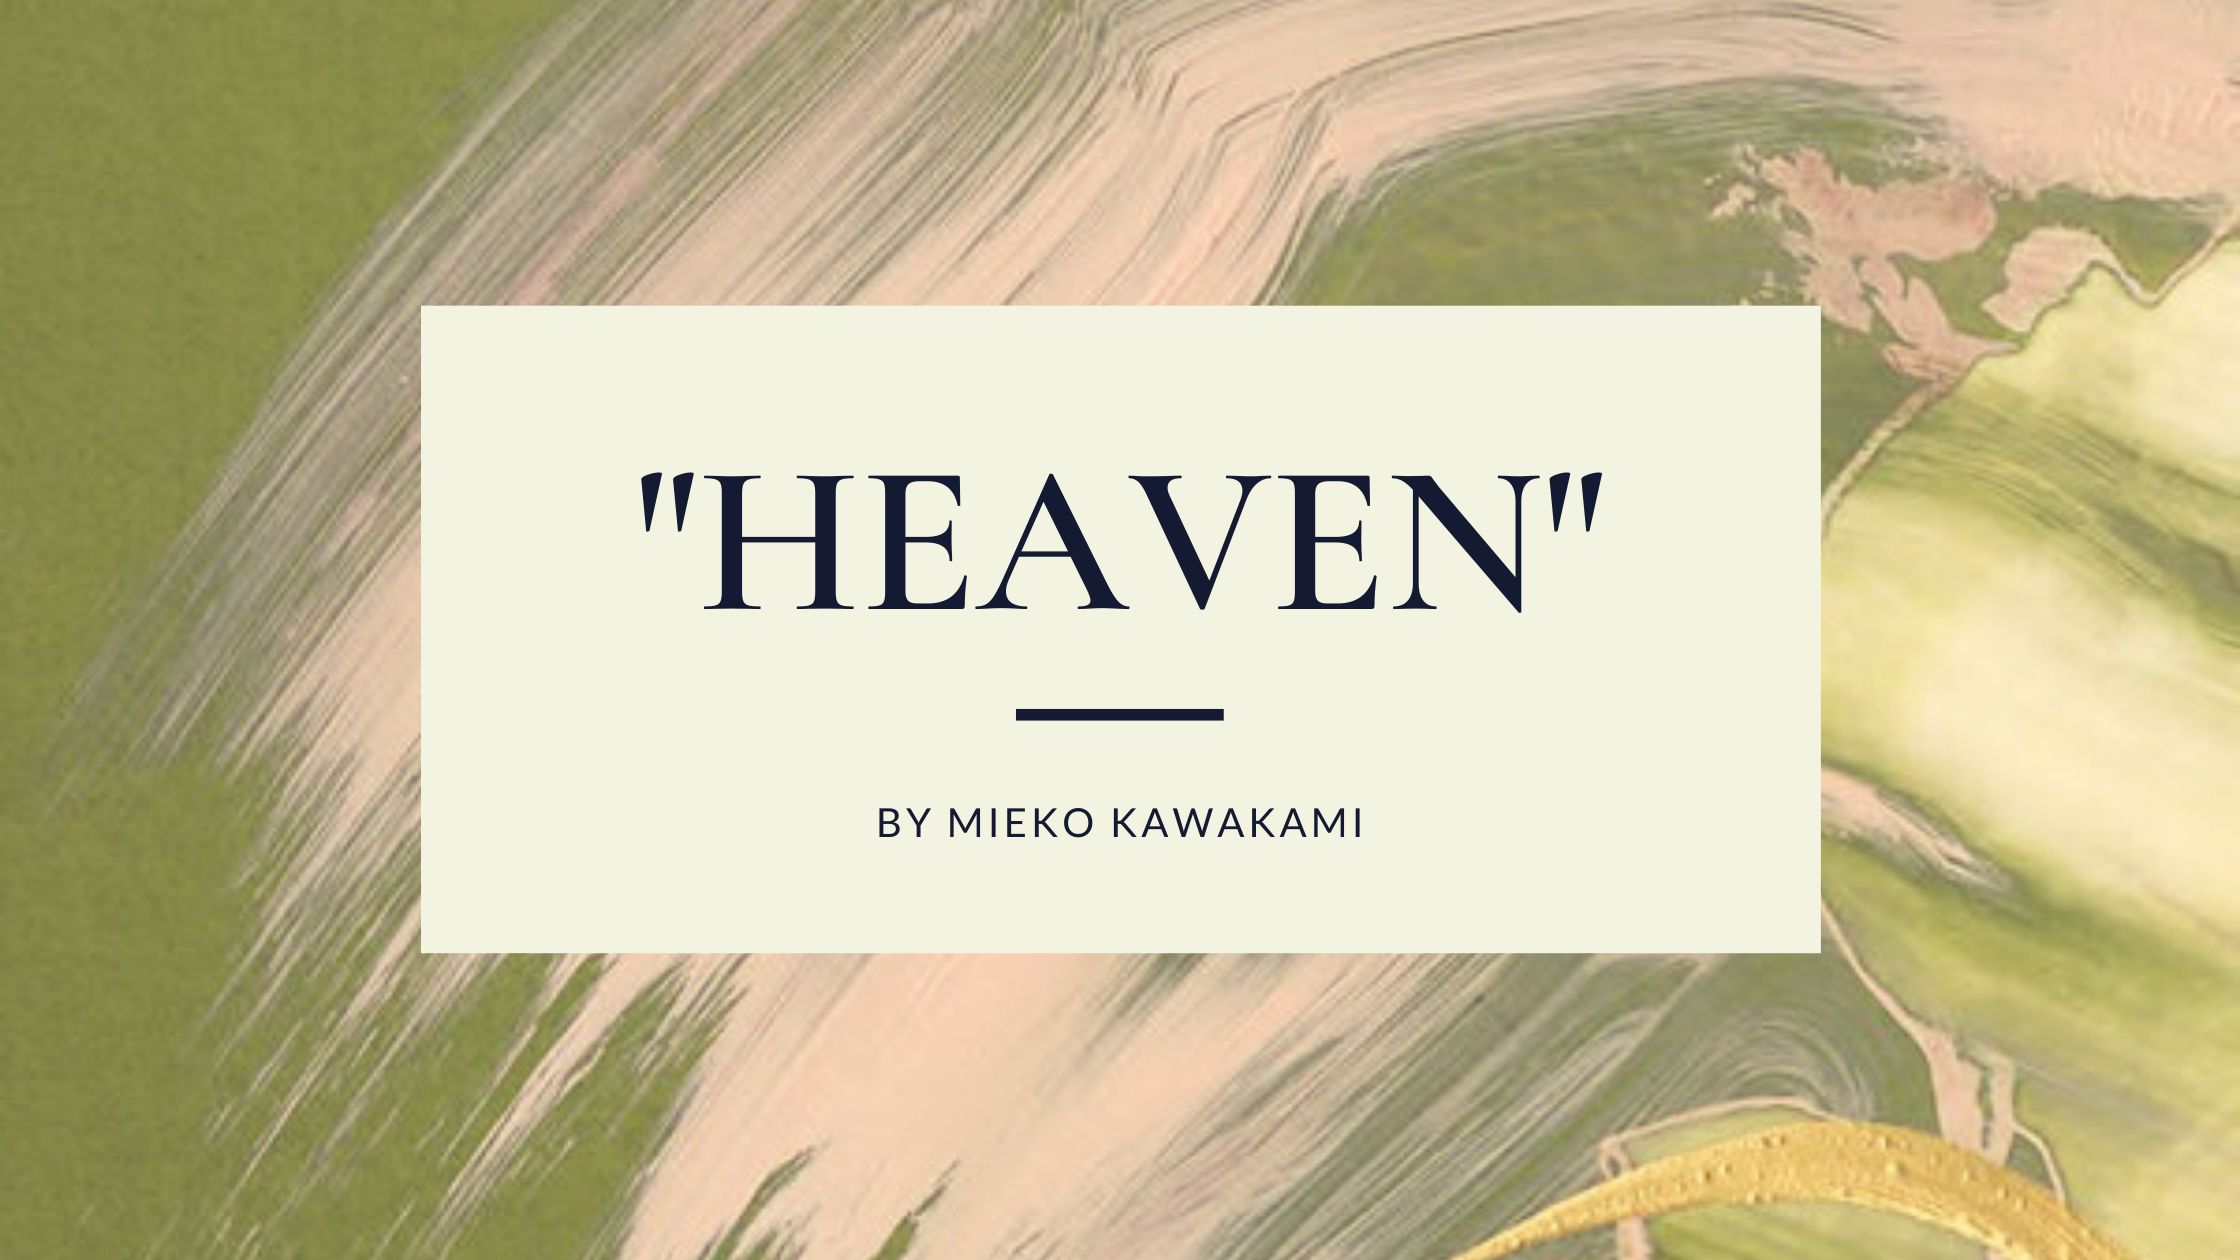 japanese novels to read 2021 translation “Heaven” by Mieko Kawakami 